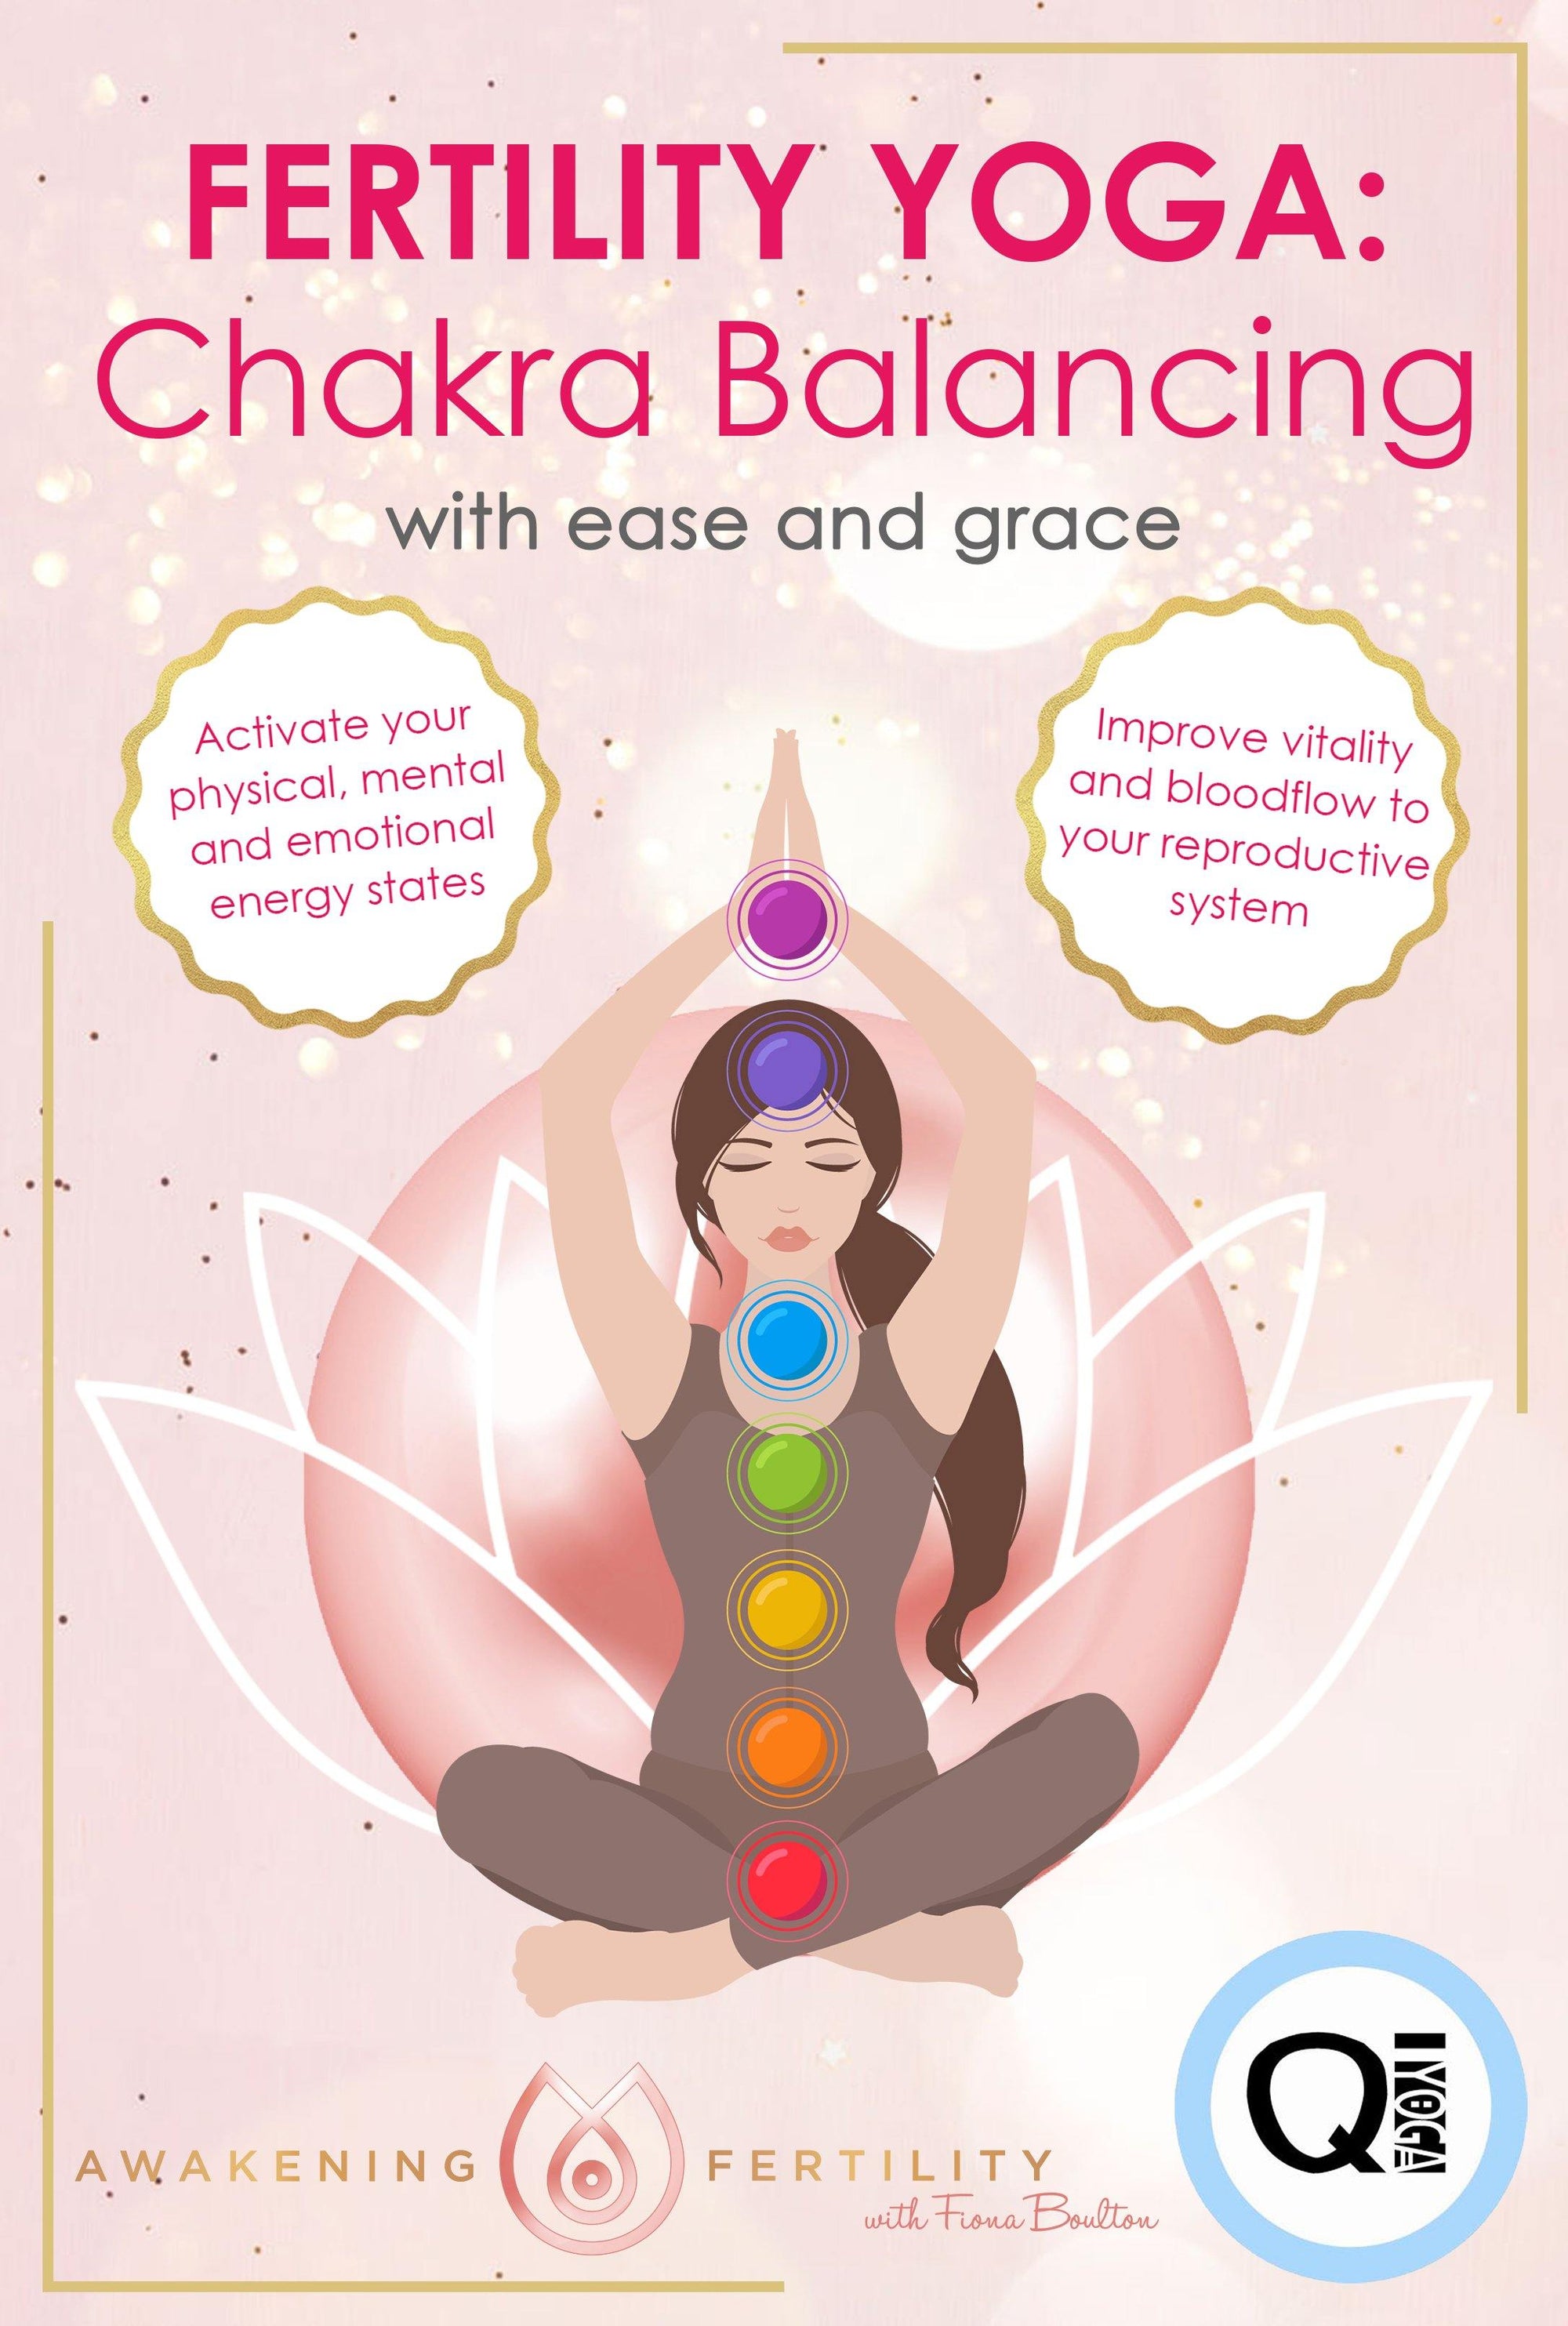 Fertility Yoga Chakra Balancing with TCM 5 Elements Healing - Powerfully Pure